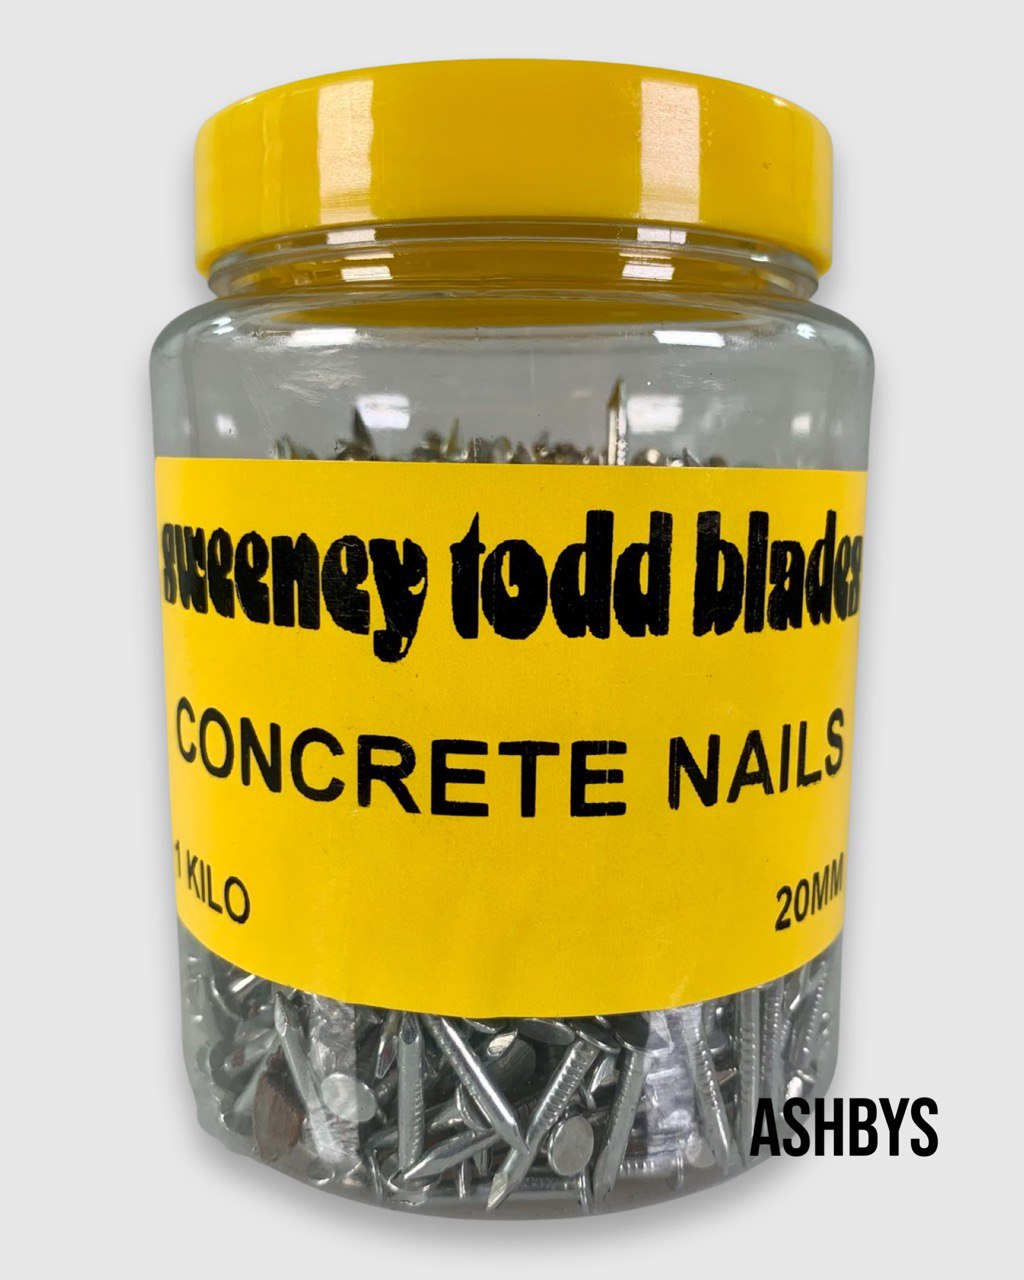 Sweeney Todd Blades Concrete Nails 20mm - 1 Kilo (NEW UNUSED OLD STOCK)